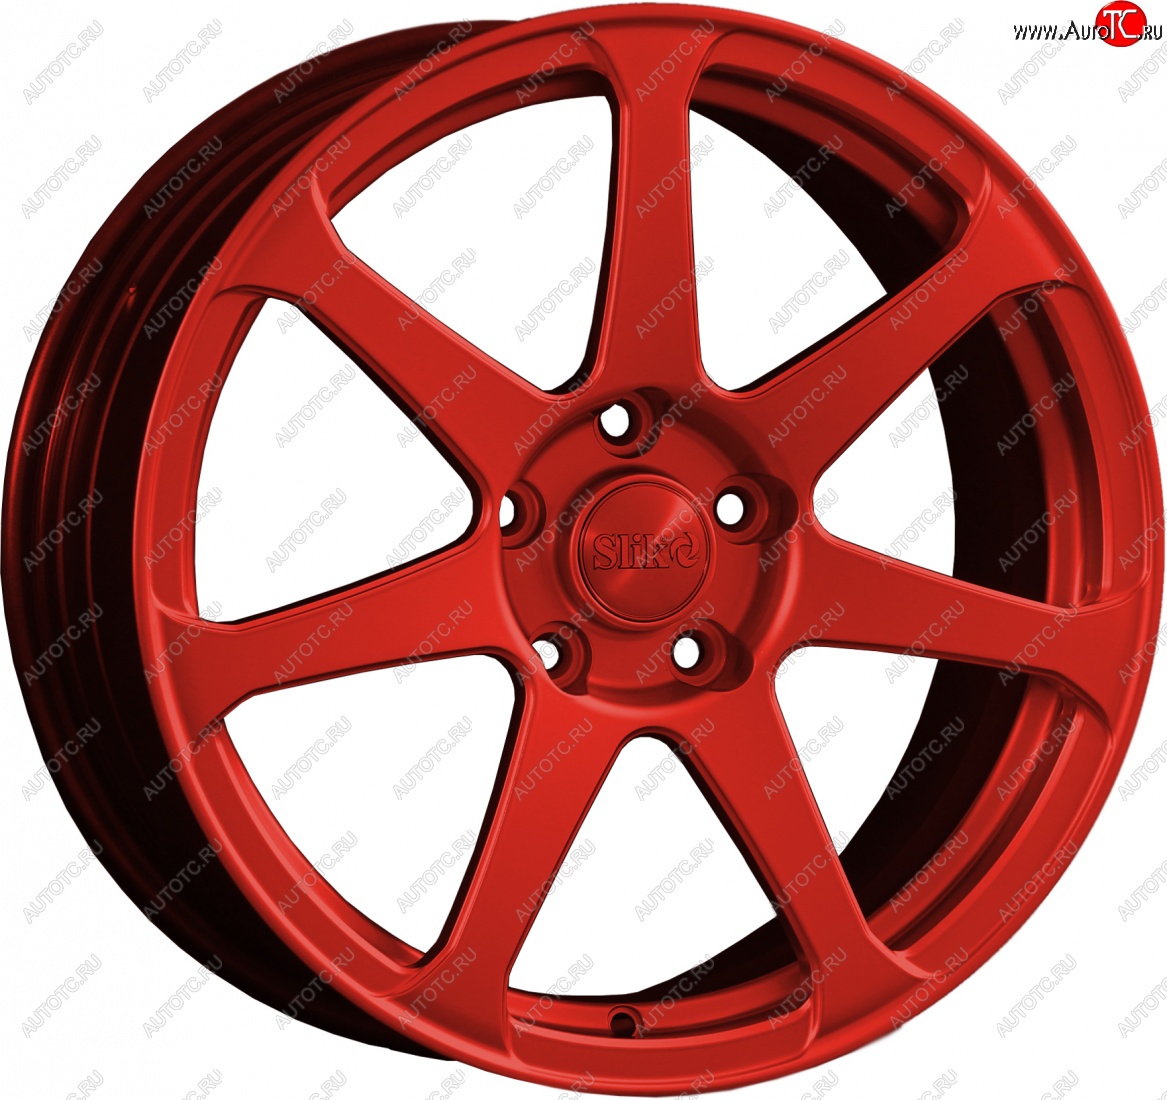 14 599 р. Кованый диск Slik classik R17x7.5 Красный (RED) 7.5x17 Chevrolet Lanos T100 седан (2002-2017) 4x100.0xDIA56.6xET49.0 (Цвет: RED)